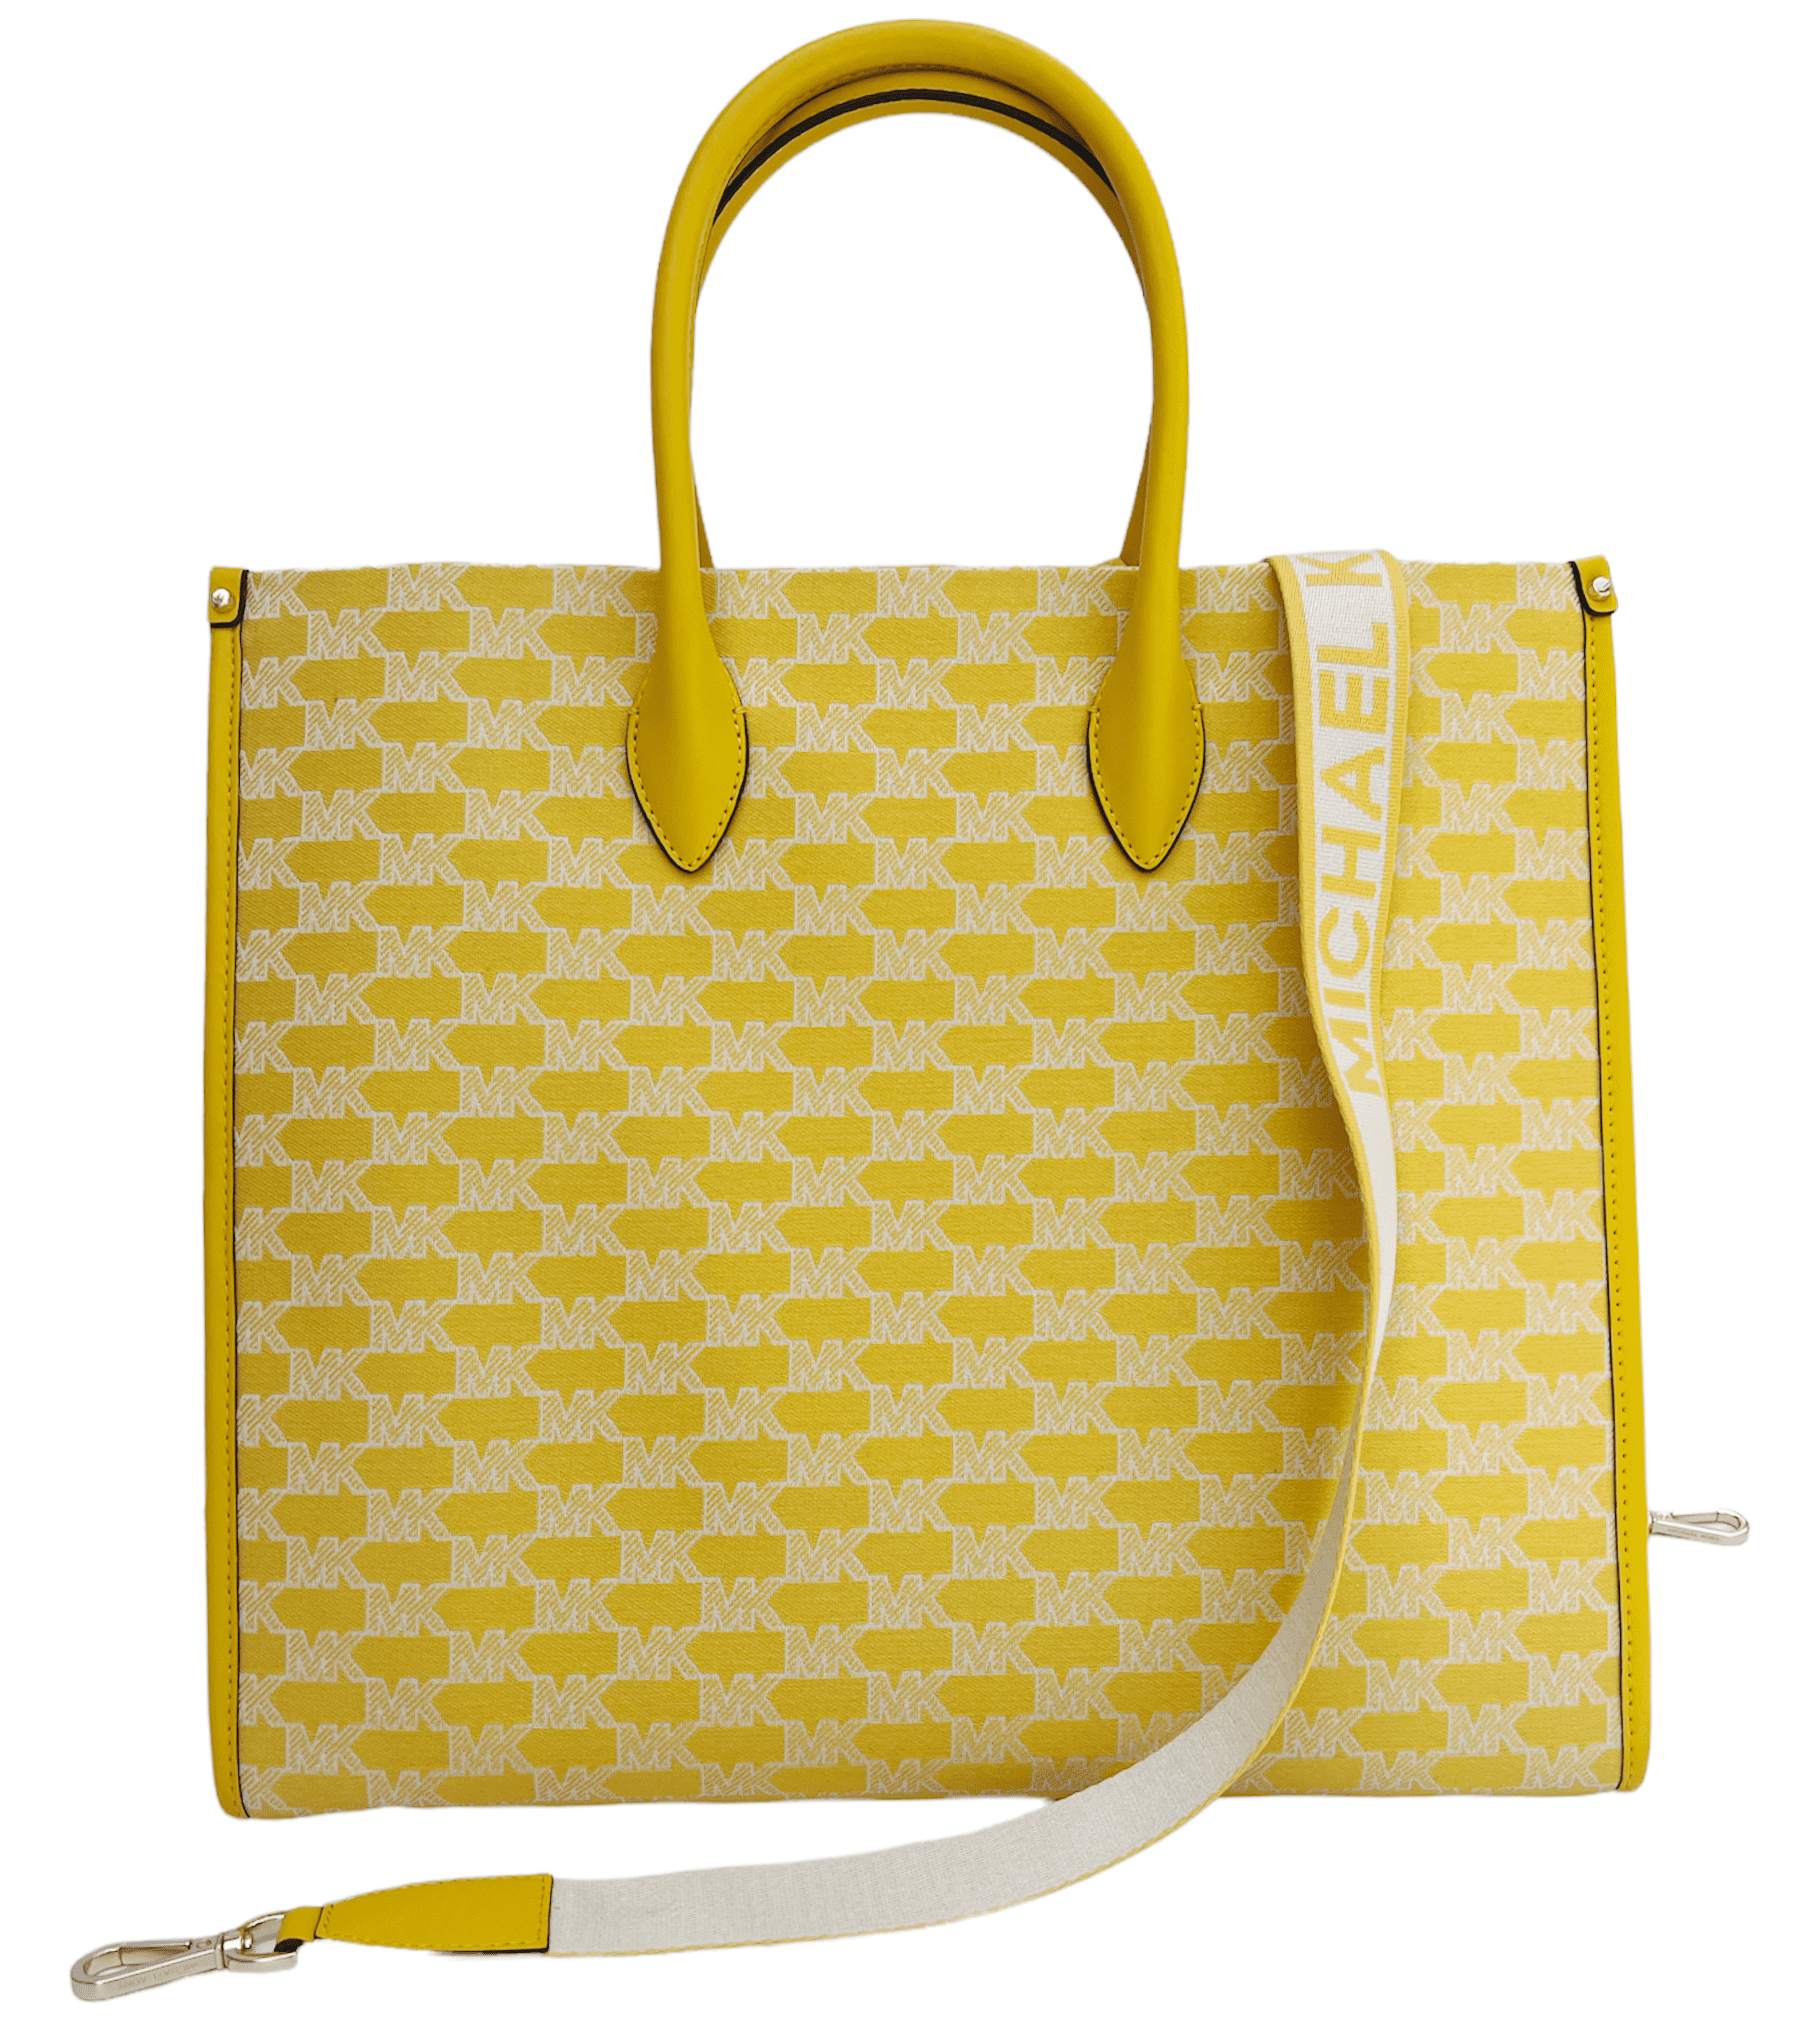 Michael Kors MK Mirella Small Shopper Top Zip Handbag  Crossbody Bag  Yellow - $179 (55% Off Retail) New With Tags - From Kash